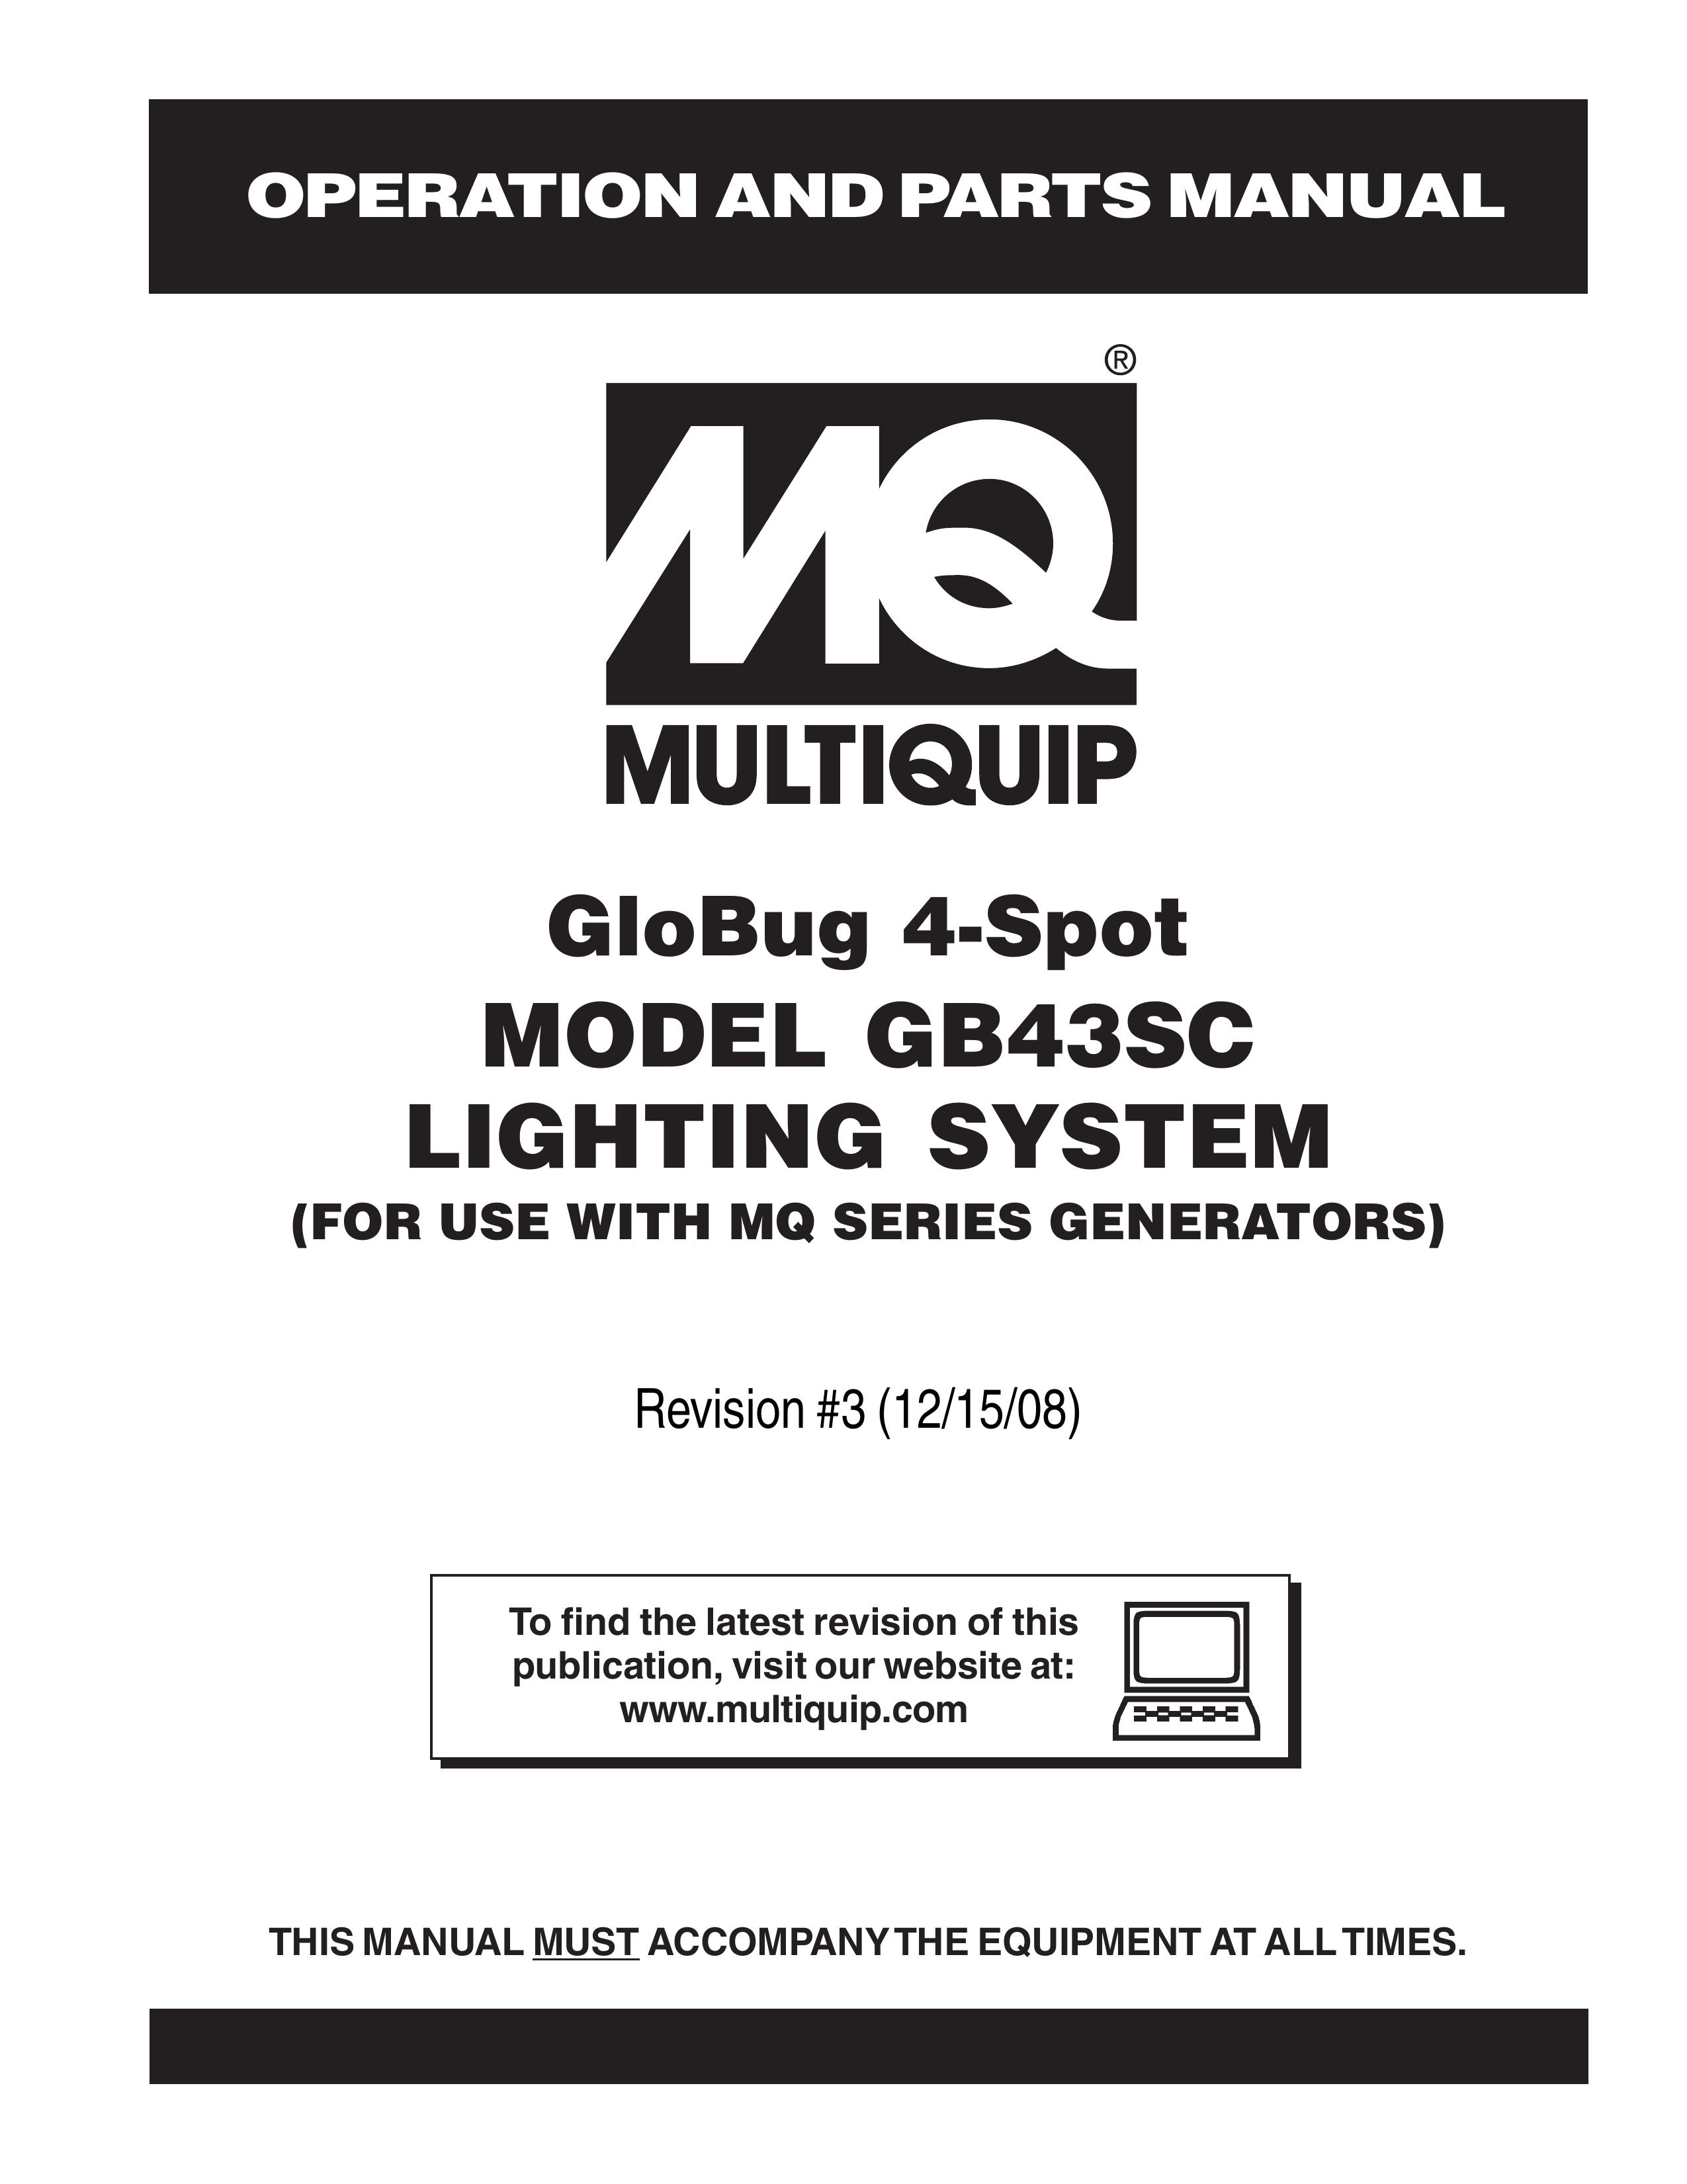 Multiquip gb43sc Landscape Lighting User Manual